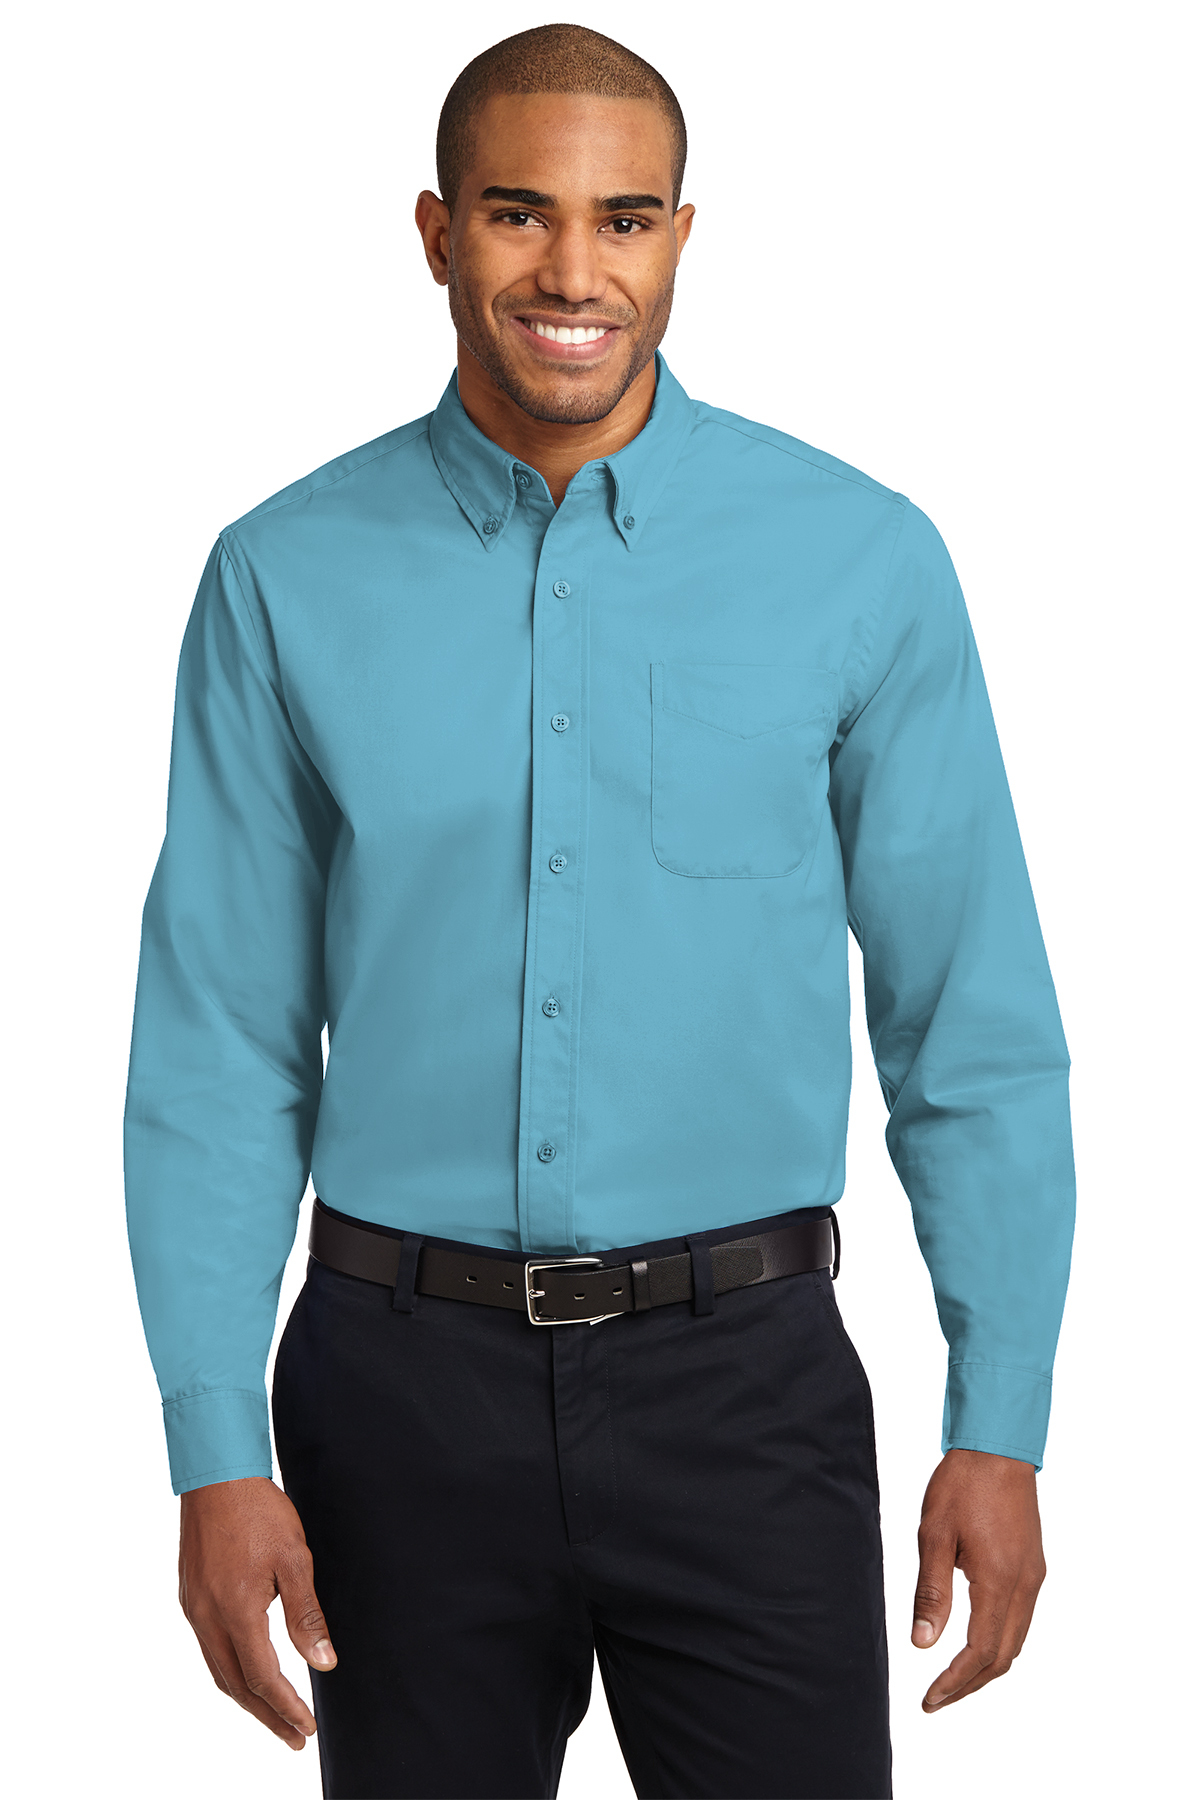 Port Authority Dimension Knit Dress Shirt-XS (Dress Shirt Blue)